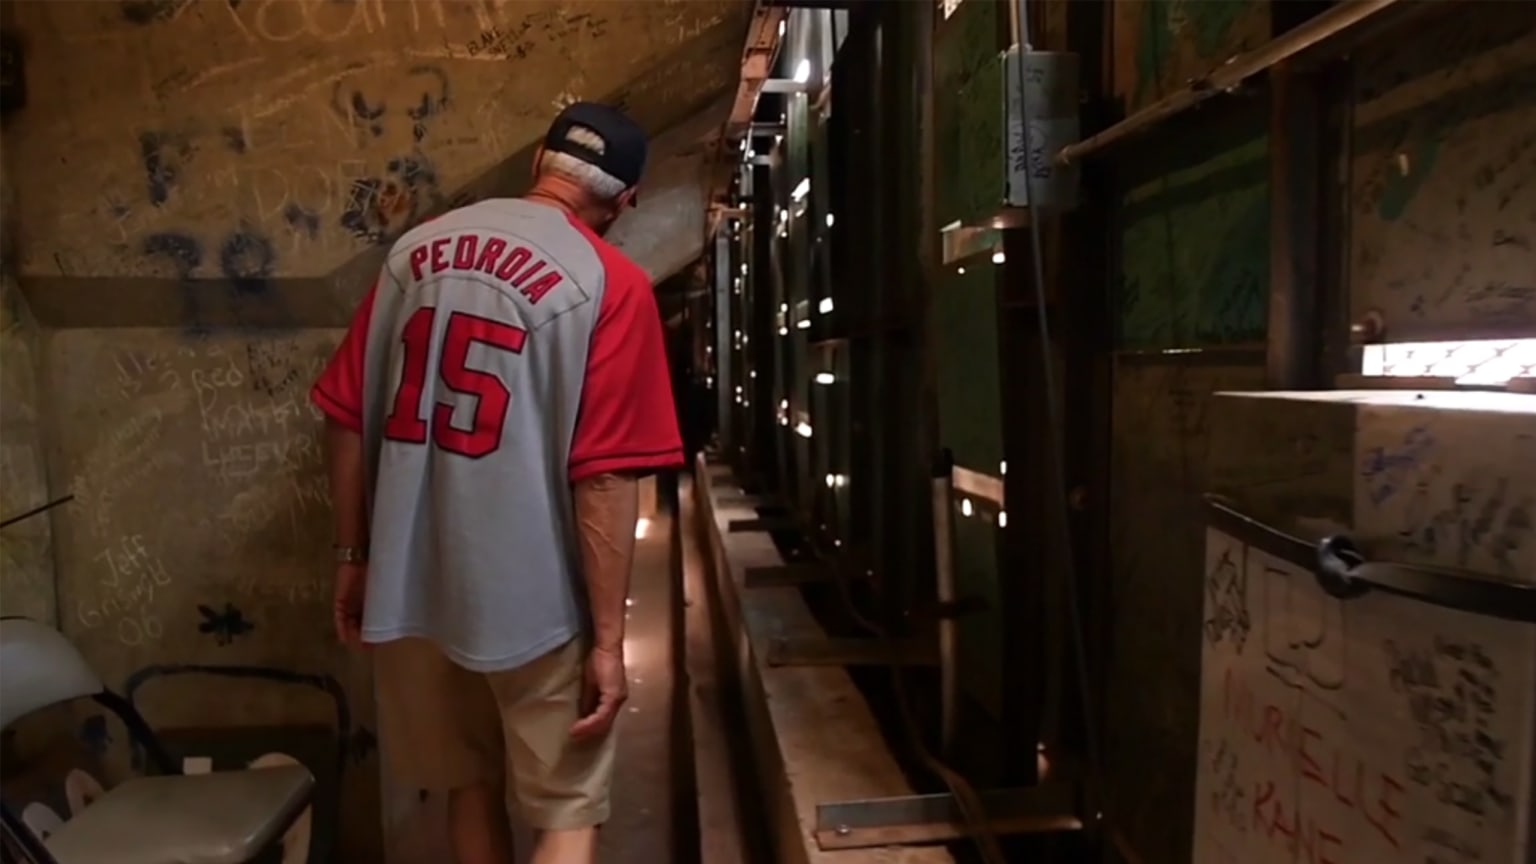 Boston Red Sox - Cheap MLB Baseball Jerseys